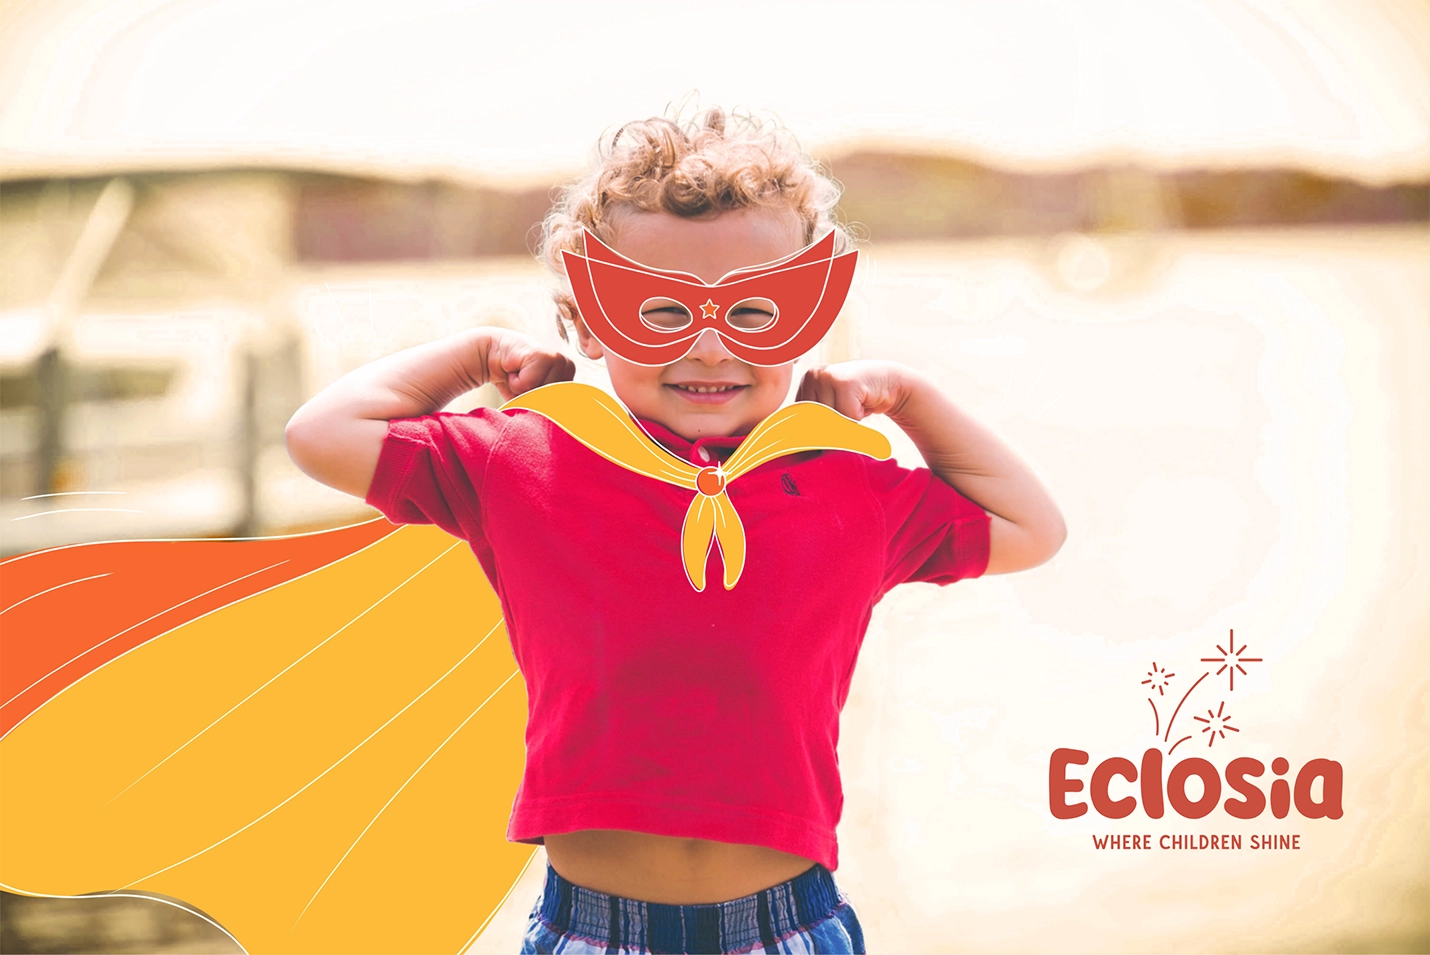 Graphic design of Eclosia's school representing a smiling child dressed as superhero